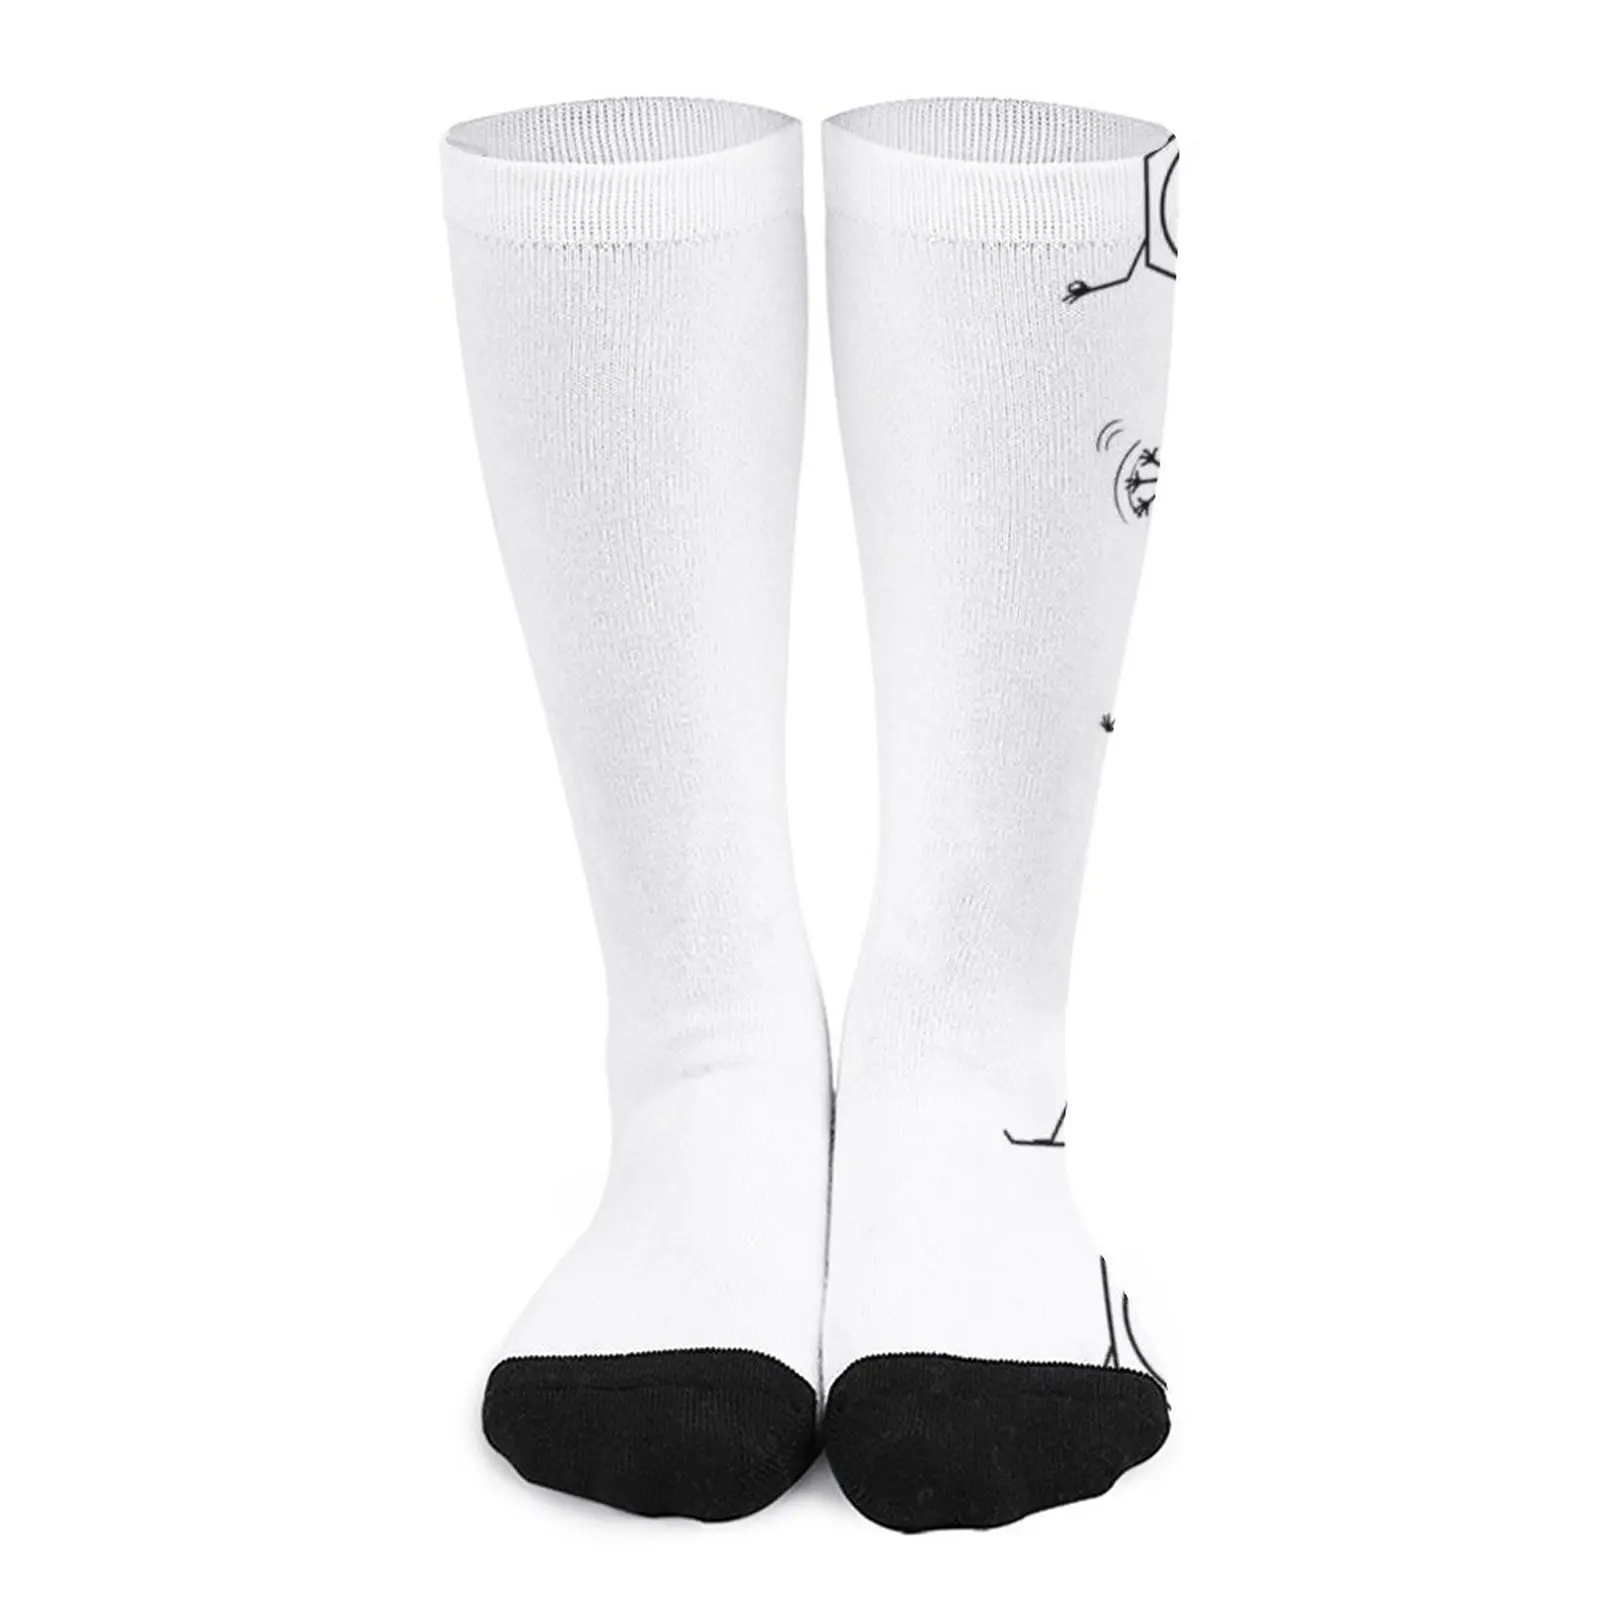 Cycloalkane Stability Socks Women's warm socks basketball Women's socks high